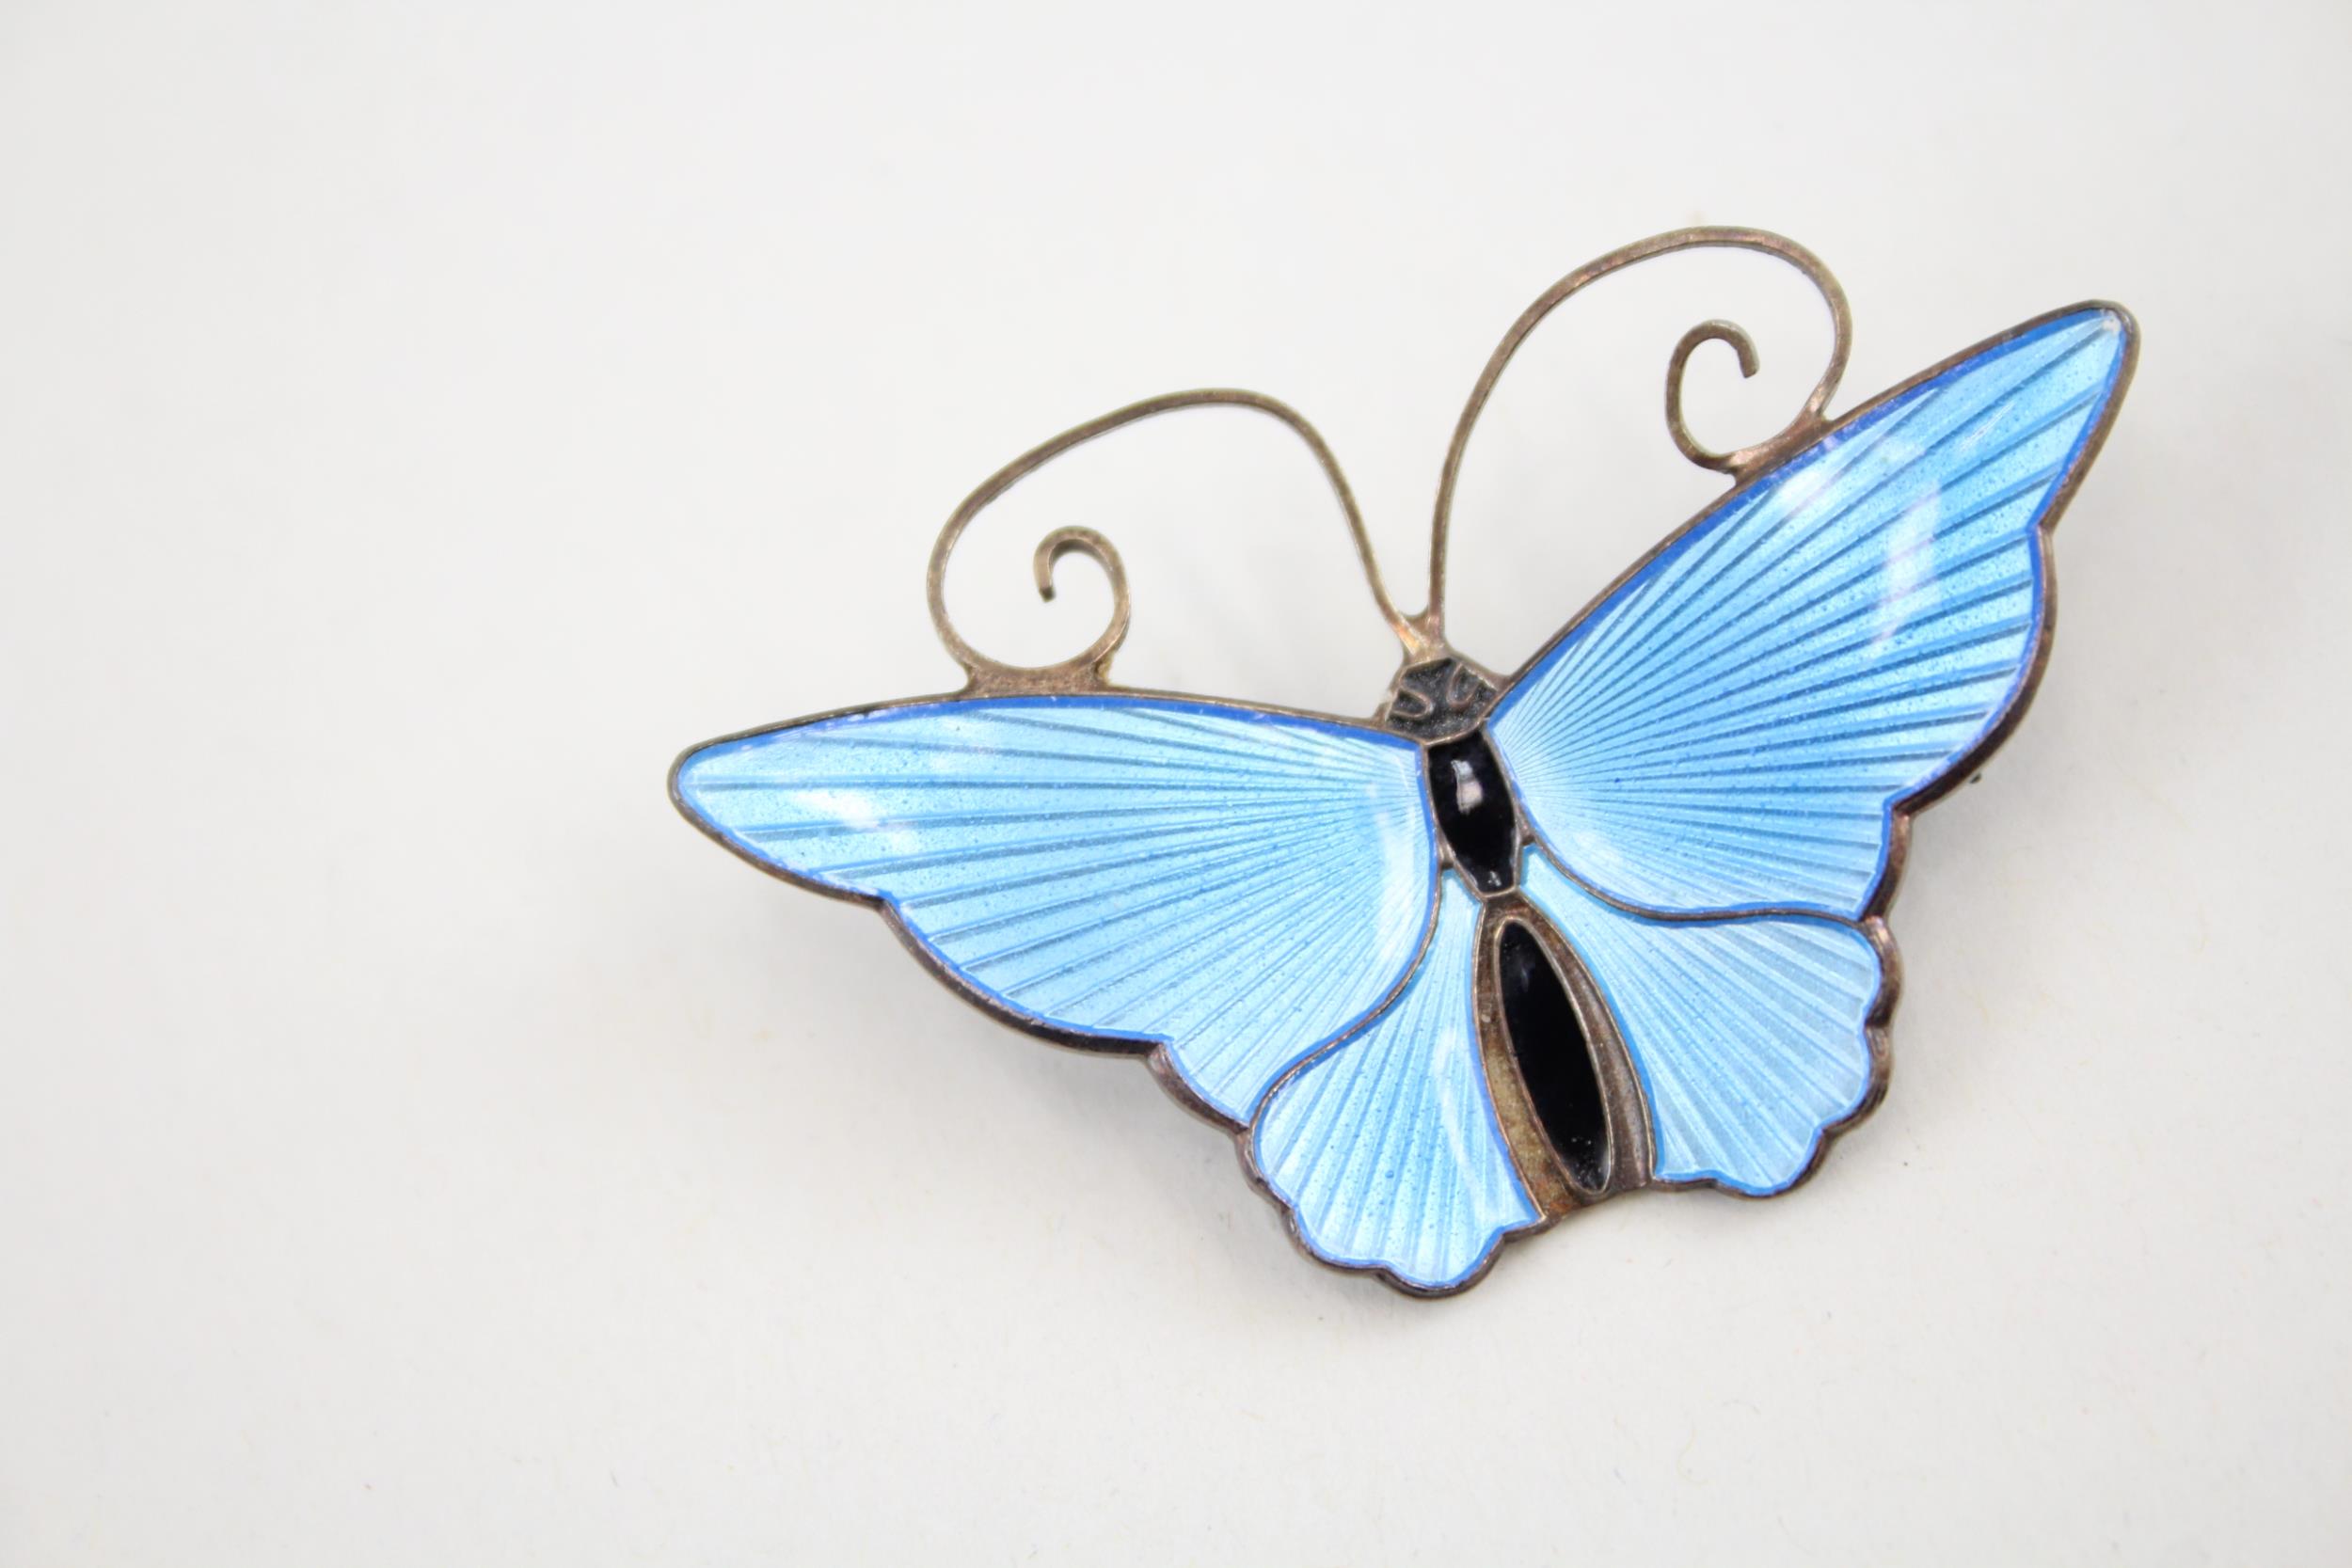 Silver enamel butterfly brooch by David Anderson (7g) - Image 2 of 5